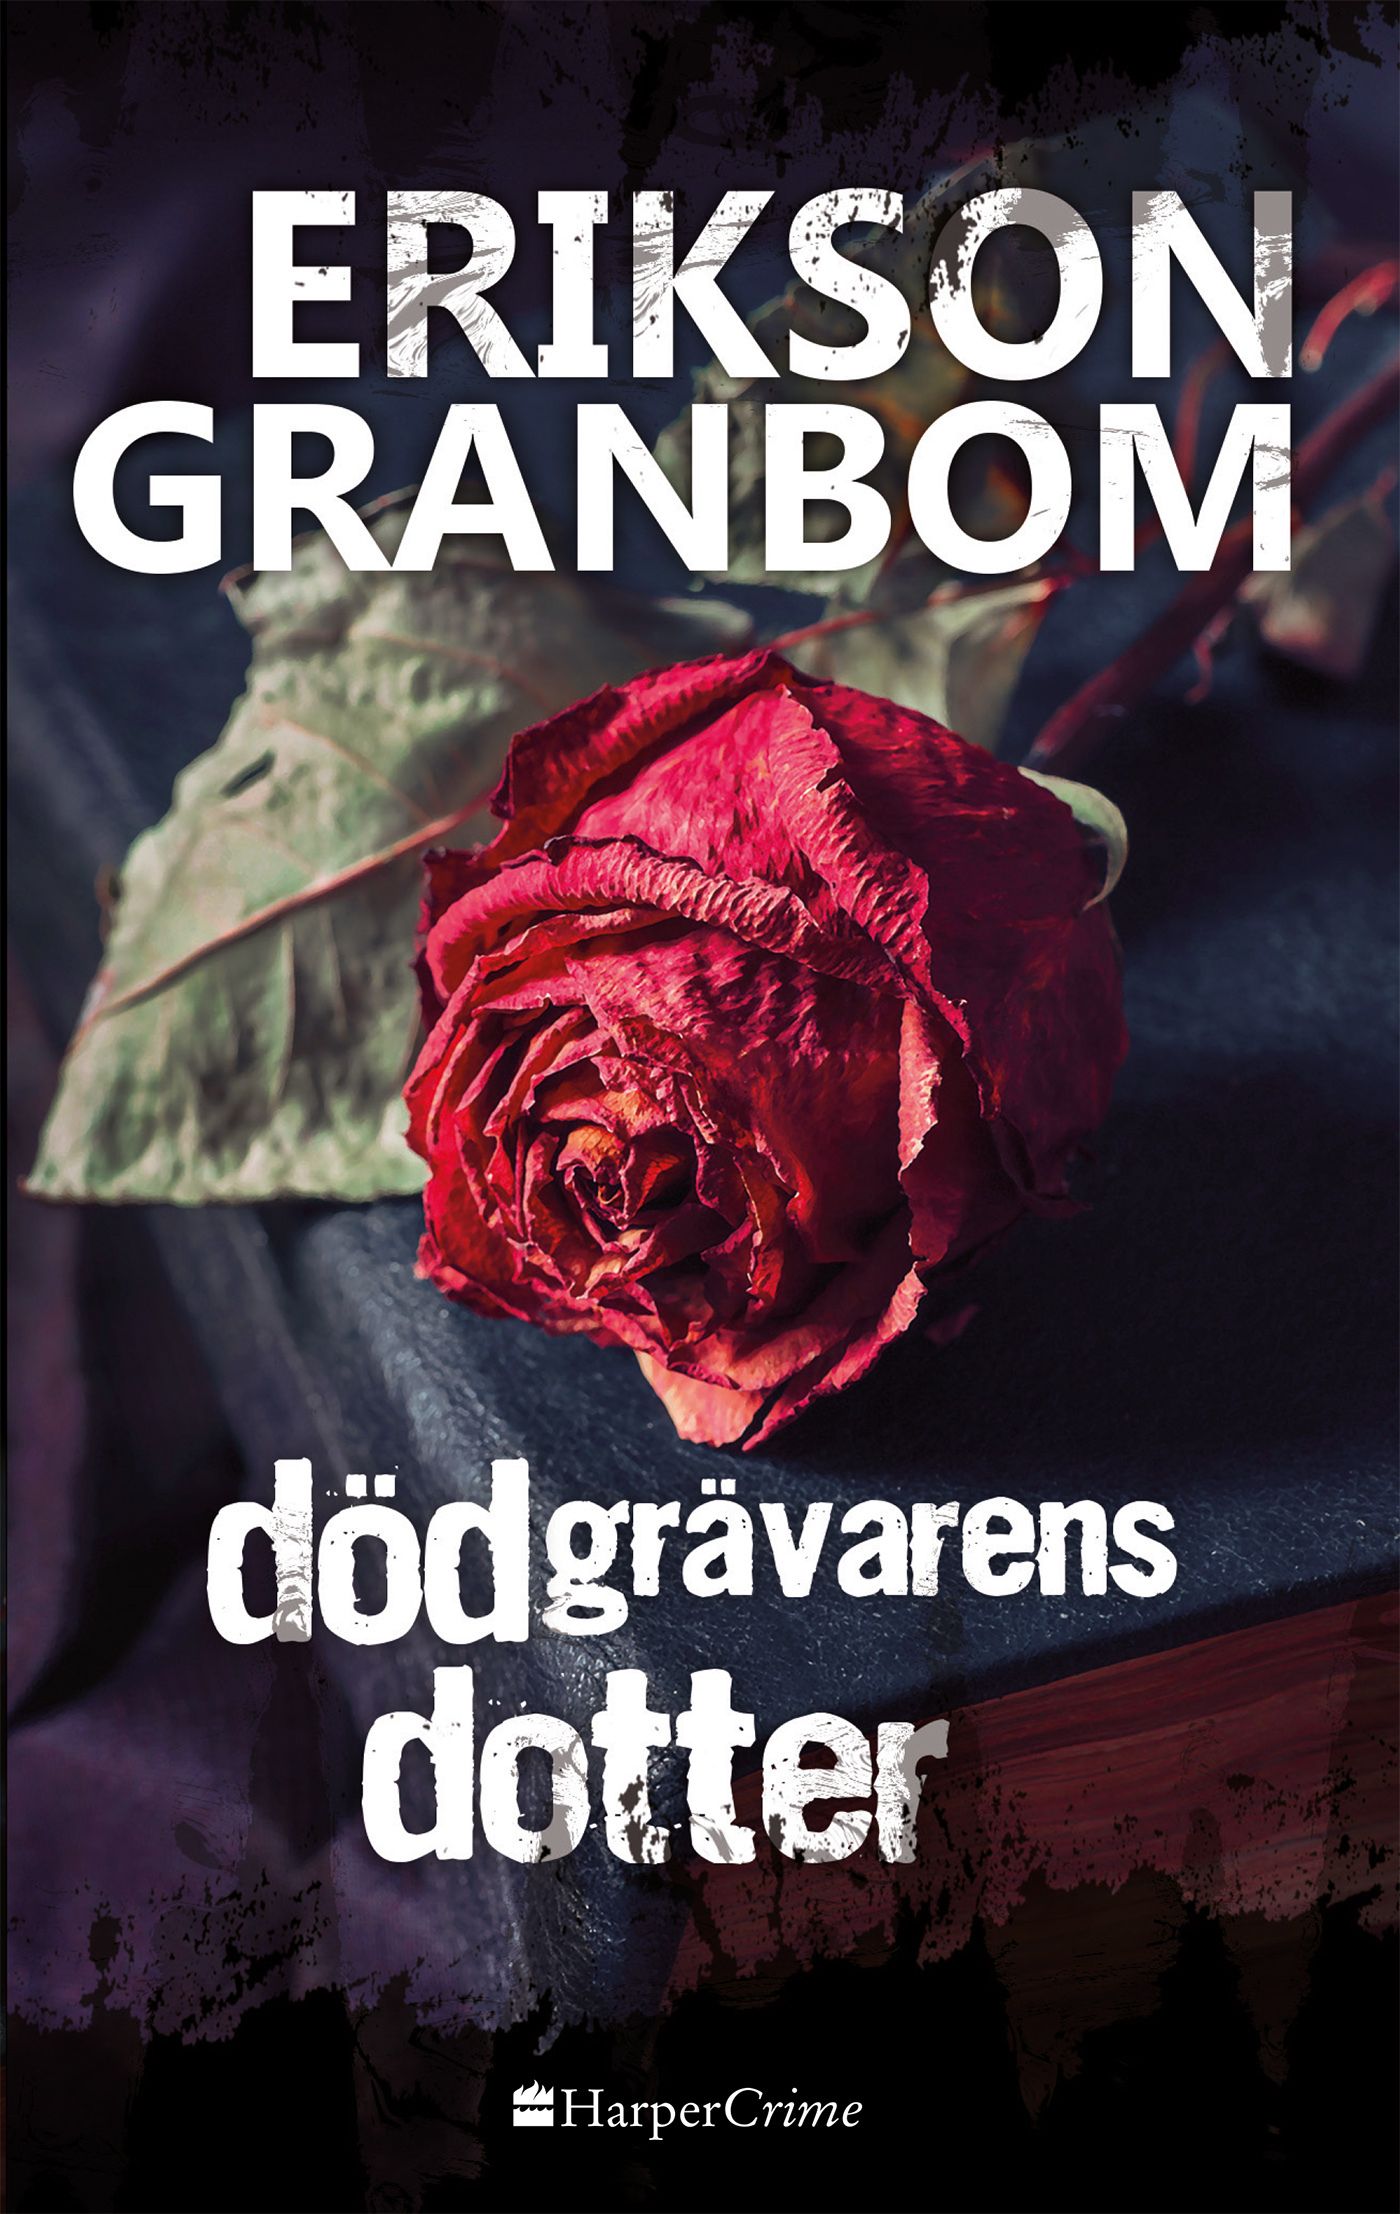 Dödgrävarens dotter, e-bok av Thomas Erikson, Christina Granbom